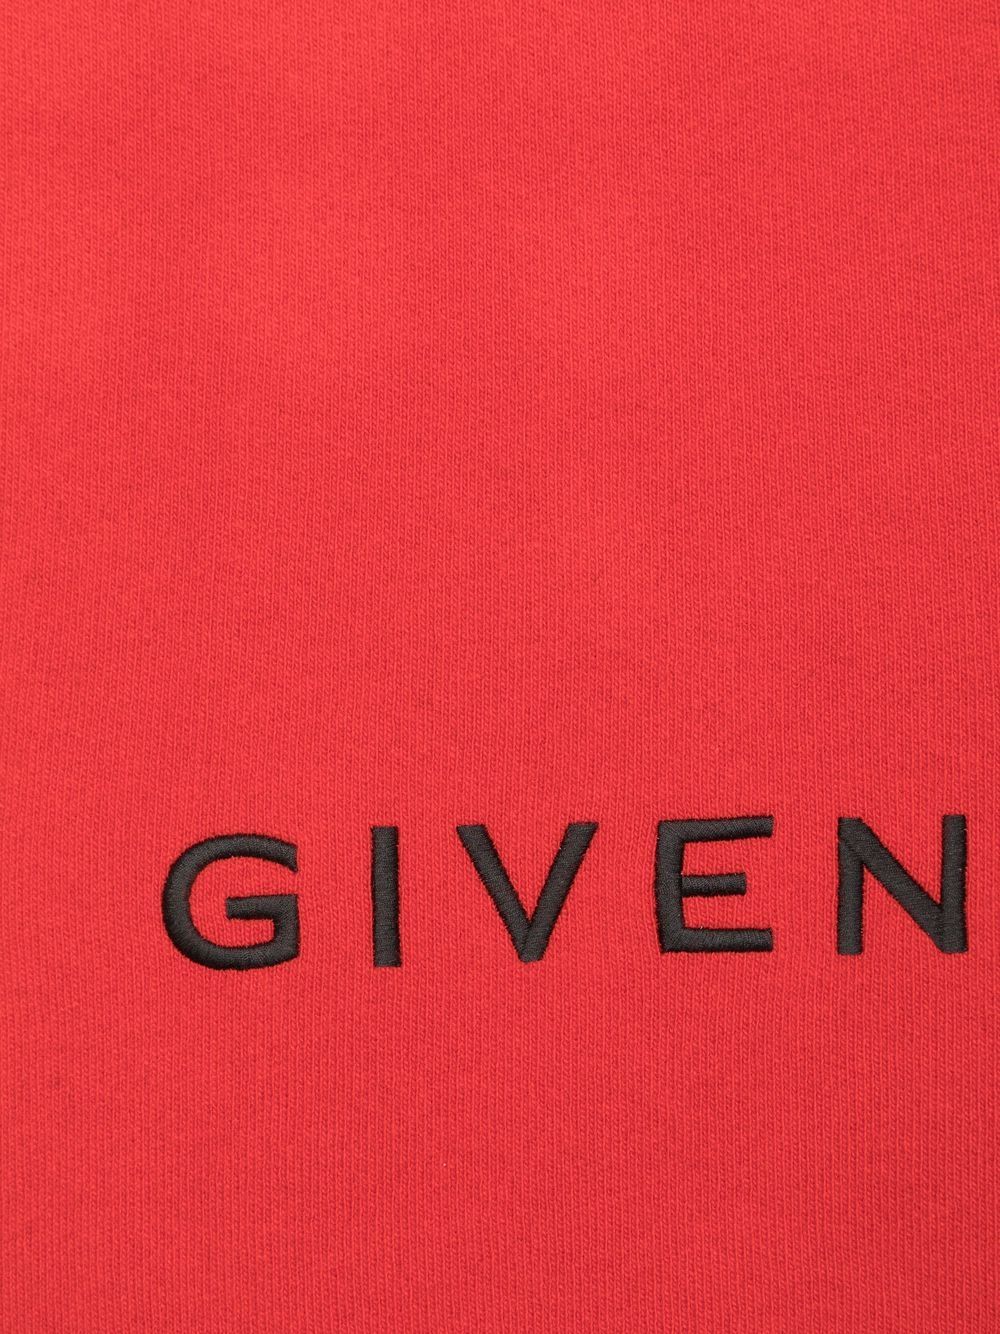 Givenchy Intarsia sjaal - Rood